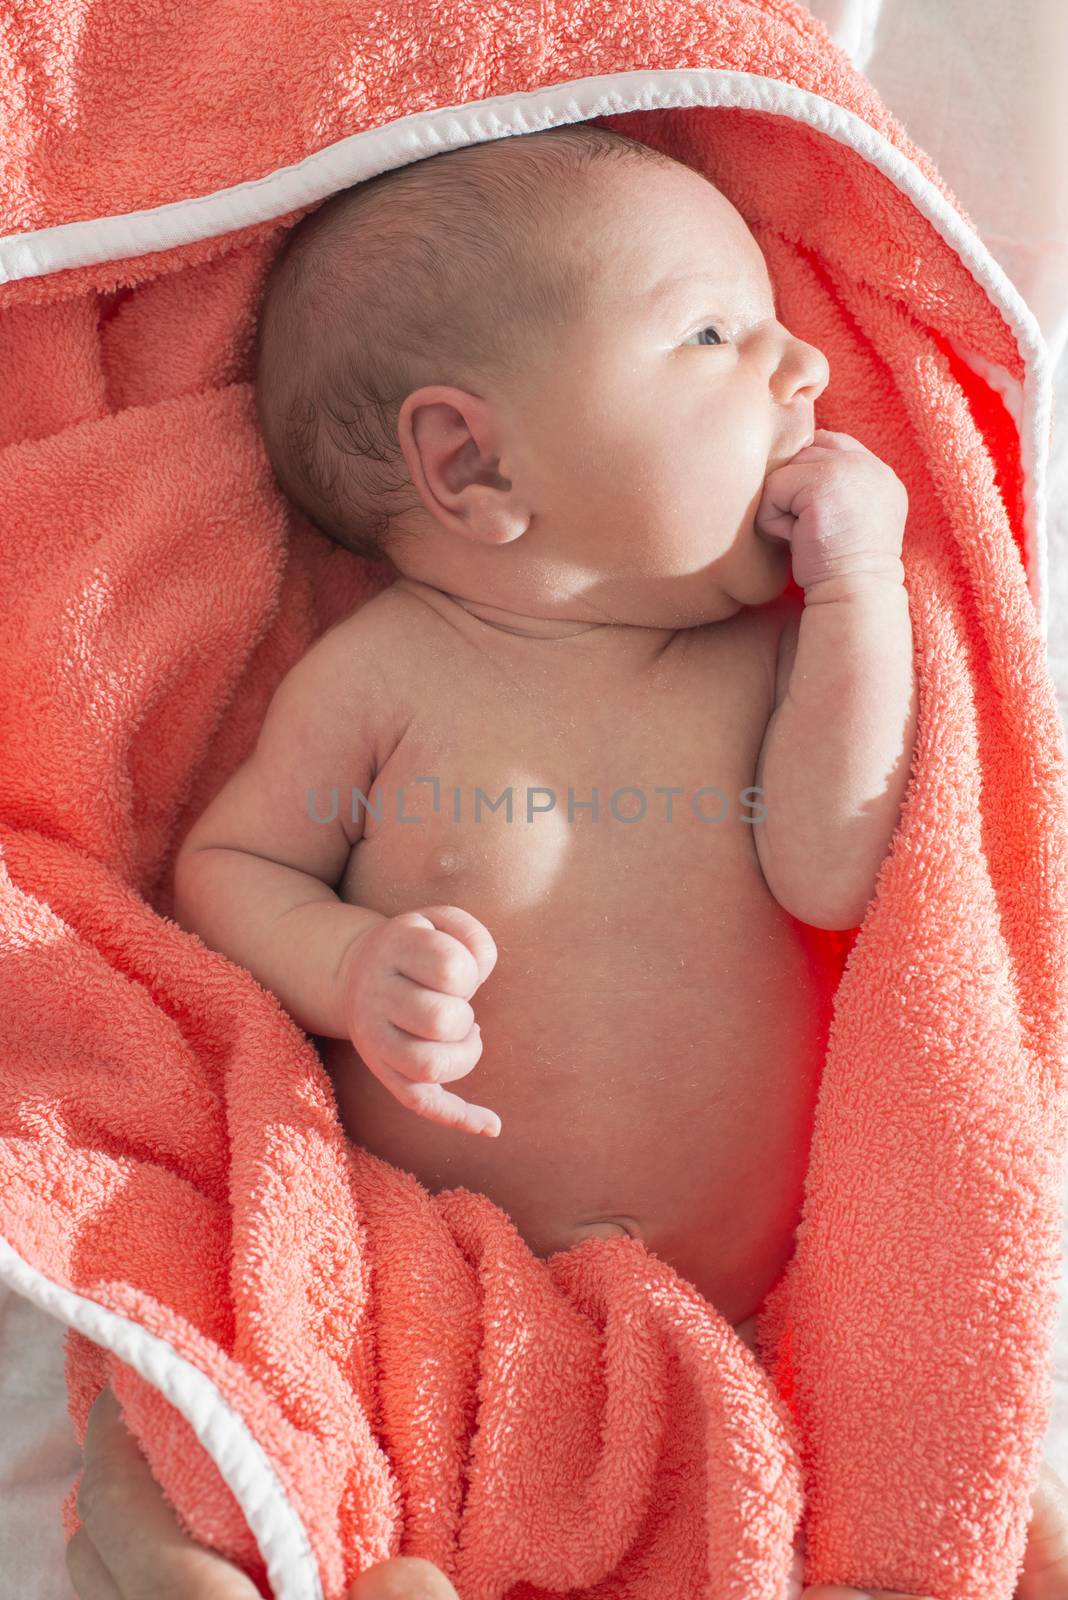 Bathing newborn baby girl. Vibrant colors